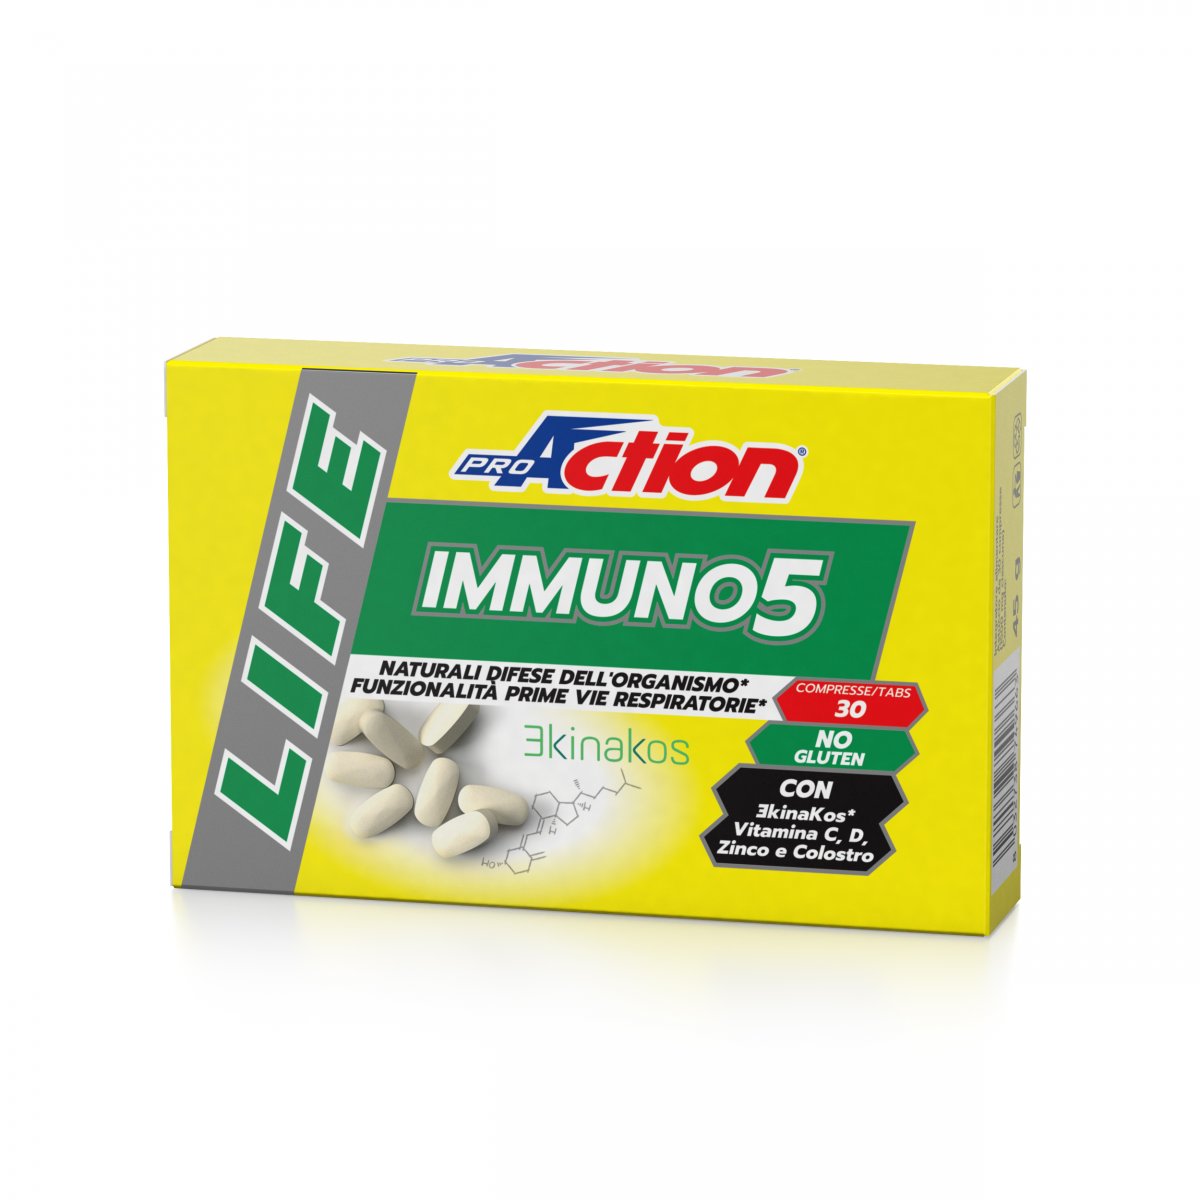 Life Immuno 5